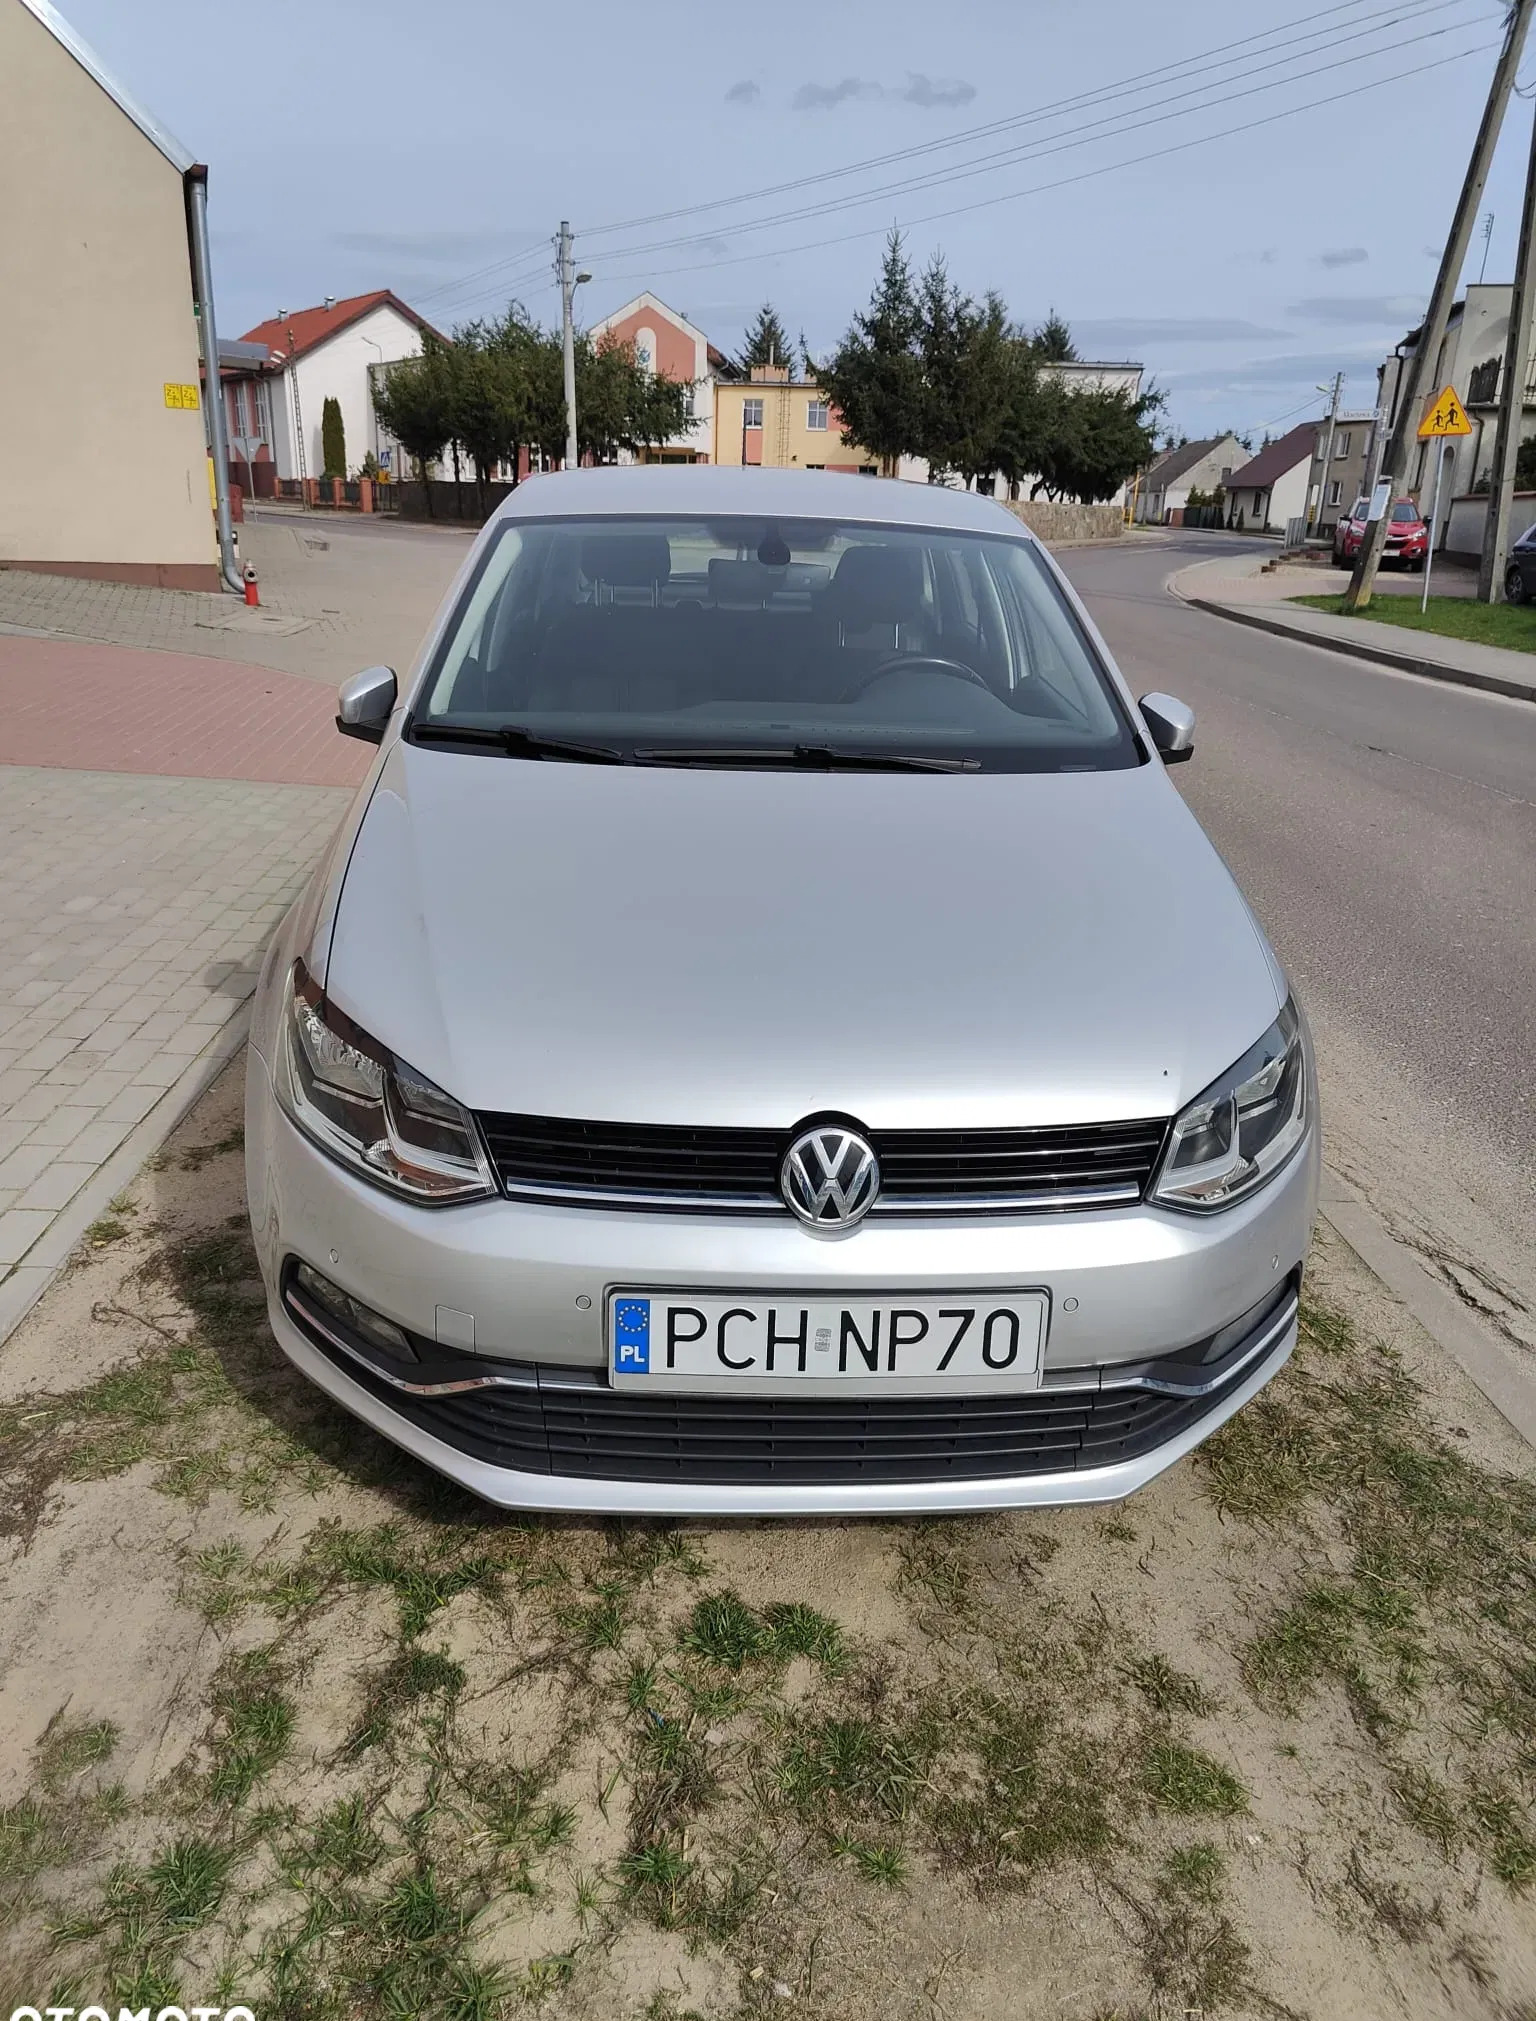 volkswagen Volkswagen Polo cena 34900 przebieg: 103000, rok produkcji 2016 z Siechnice